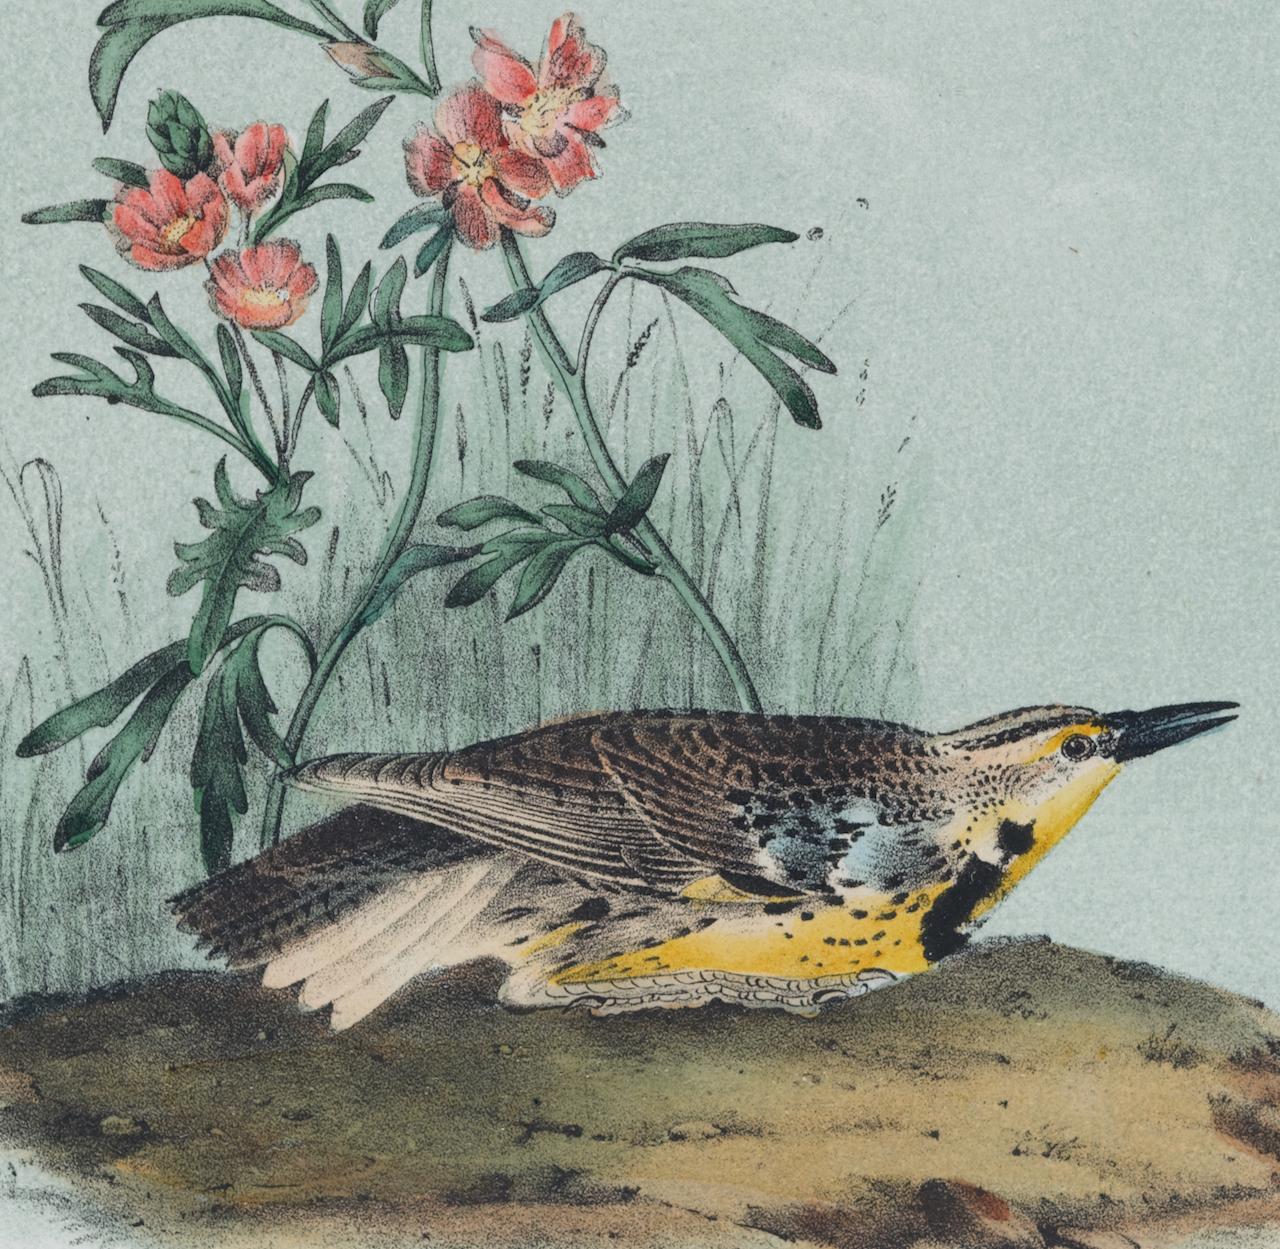 Missouri Meadow Lark: An Original 19th C. Audubon Hand-colored Bird Lithograph  - Naturalistic Print by John James Audubon